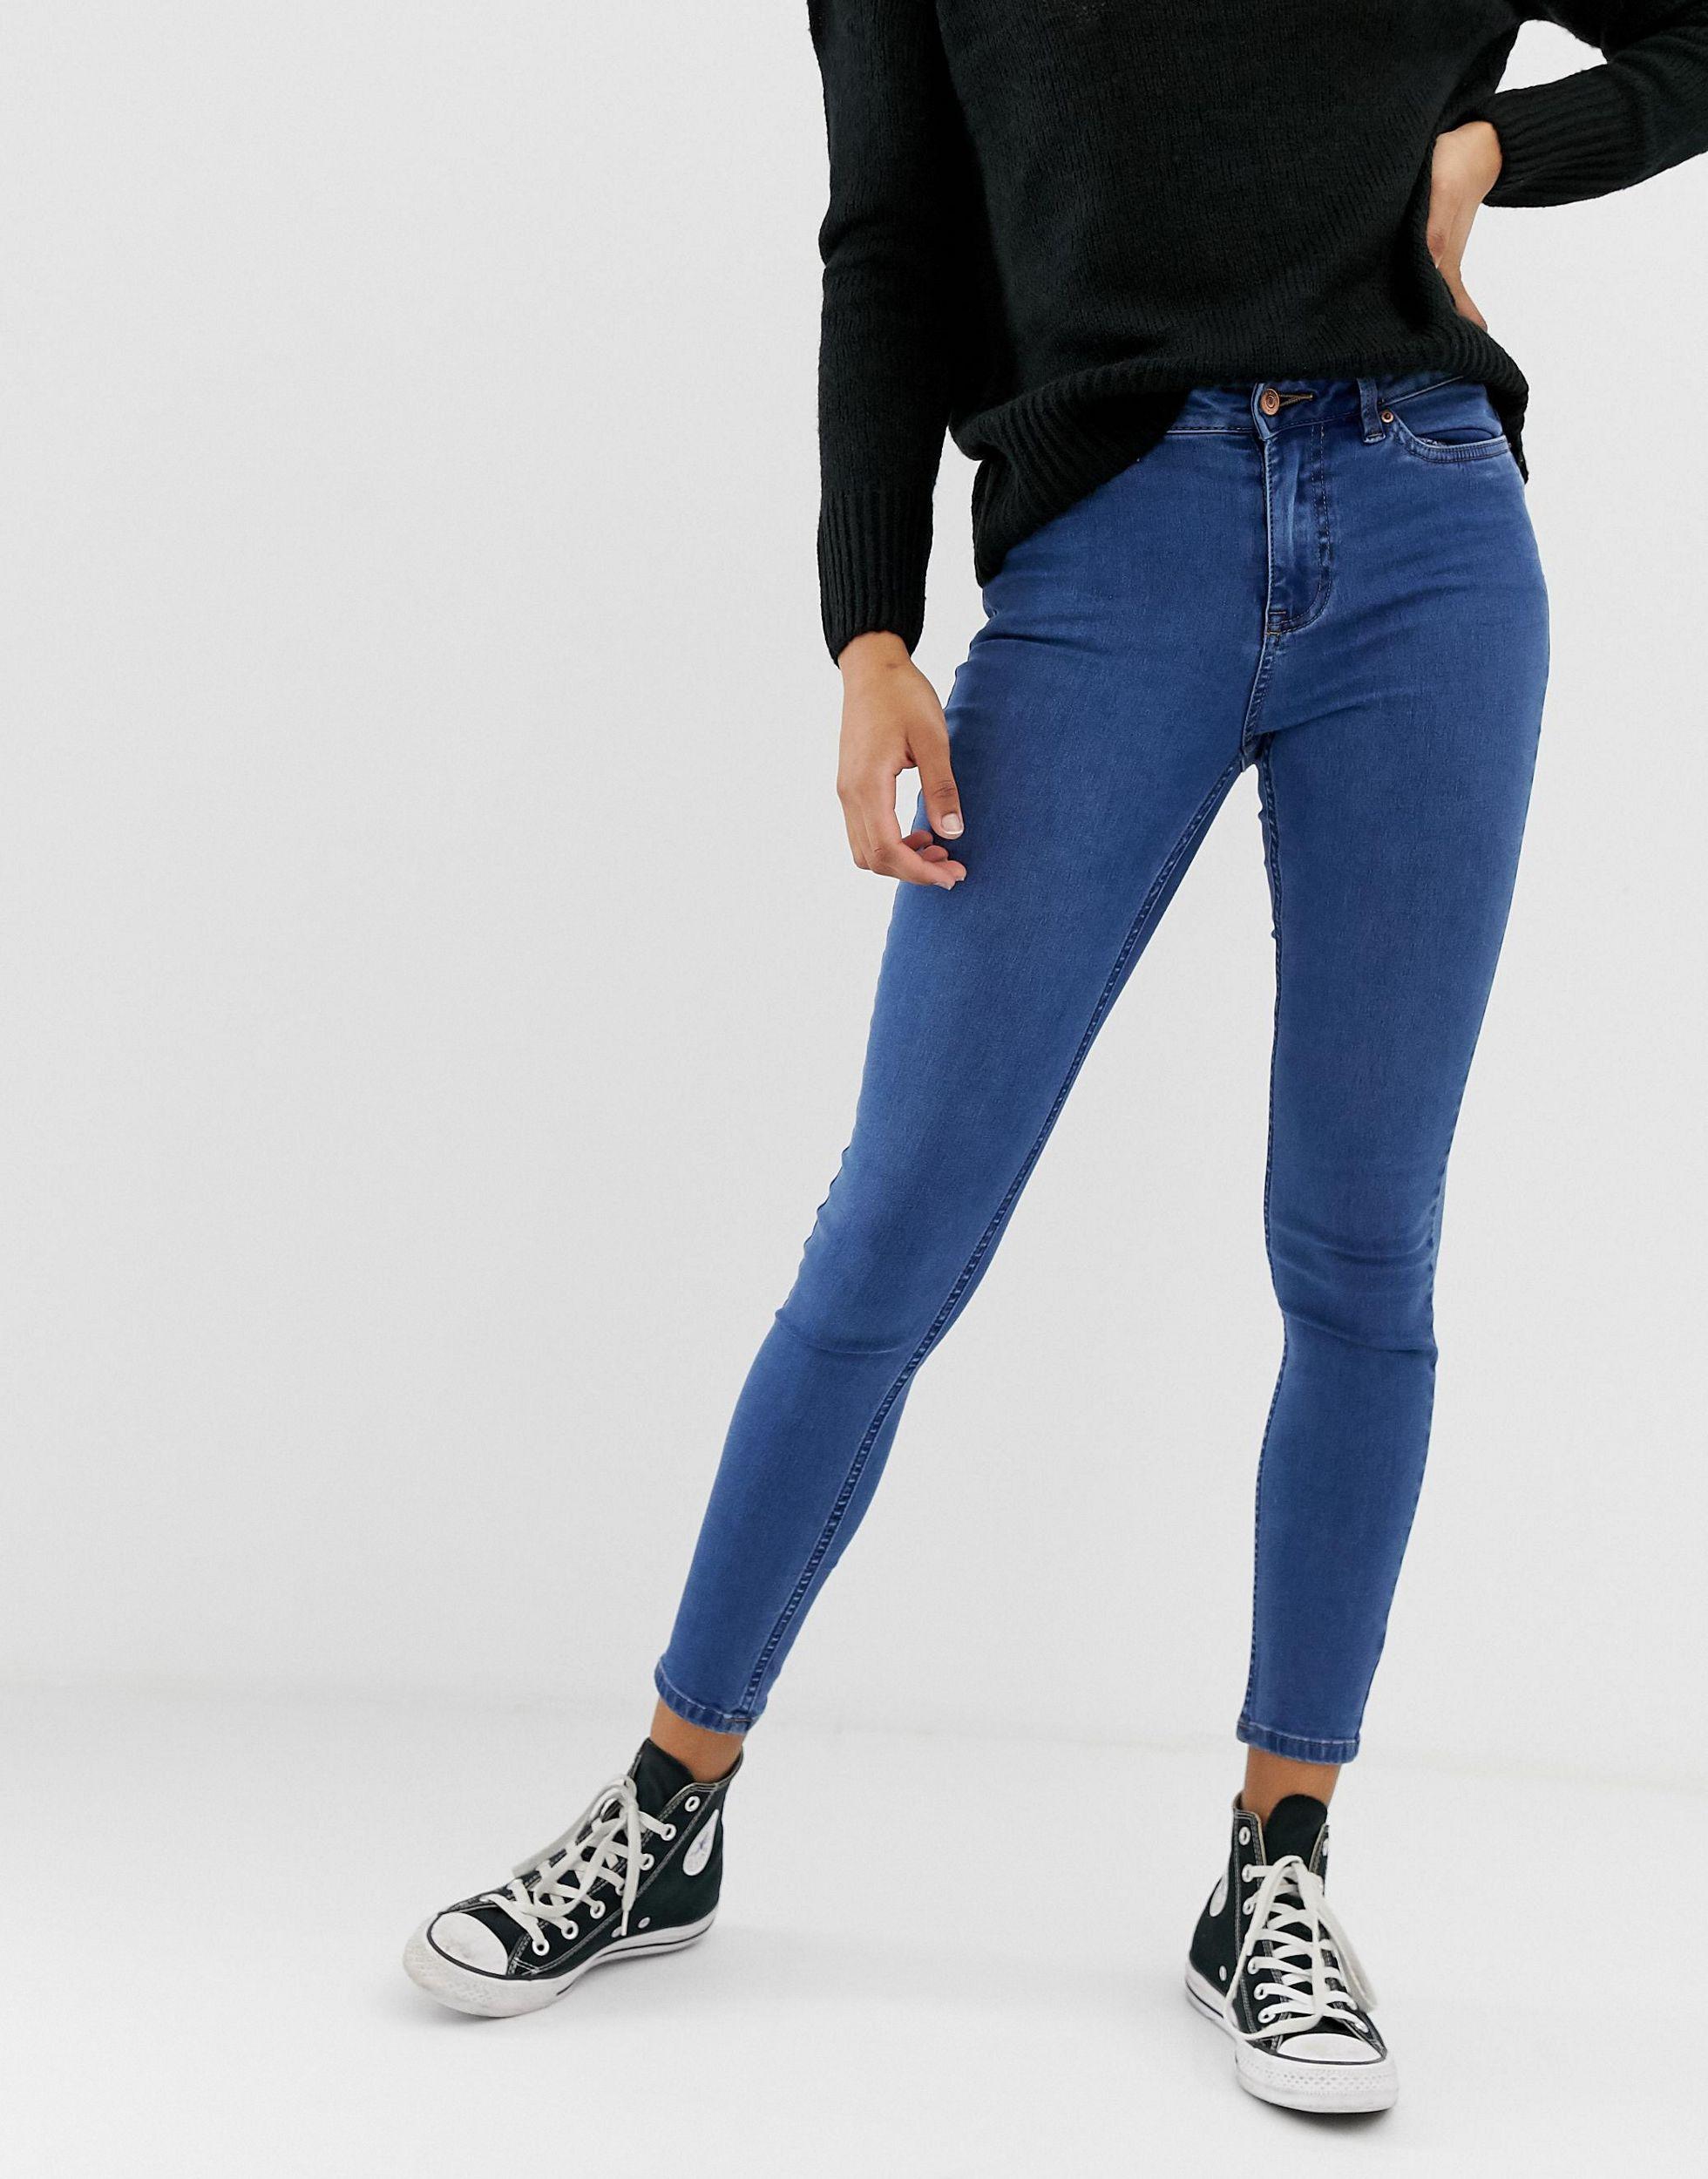 New jeans фото. New look джинсы super skinny женские. Джинсы скинни женские. Джинсы скинни синие. Джинсы скинни синие женские.